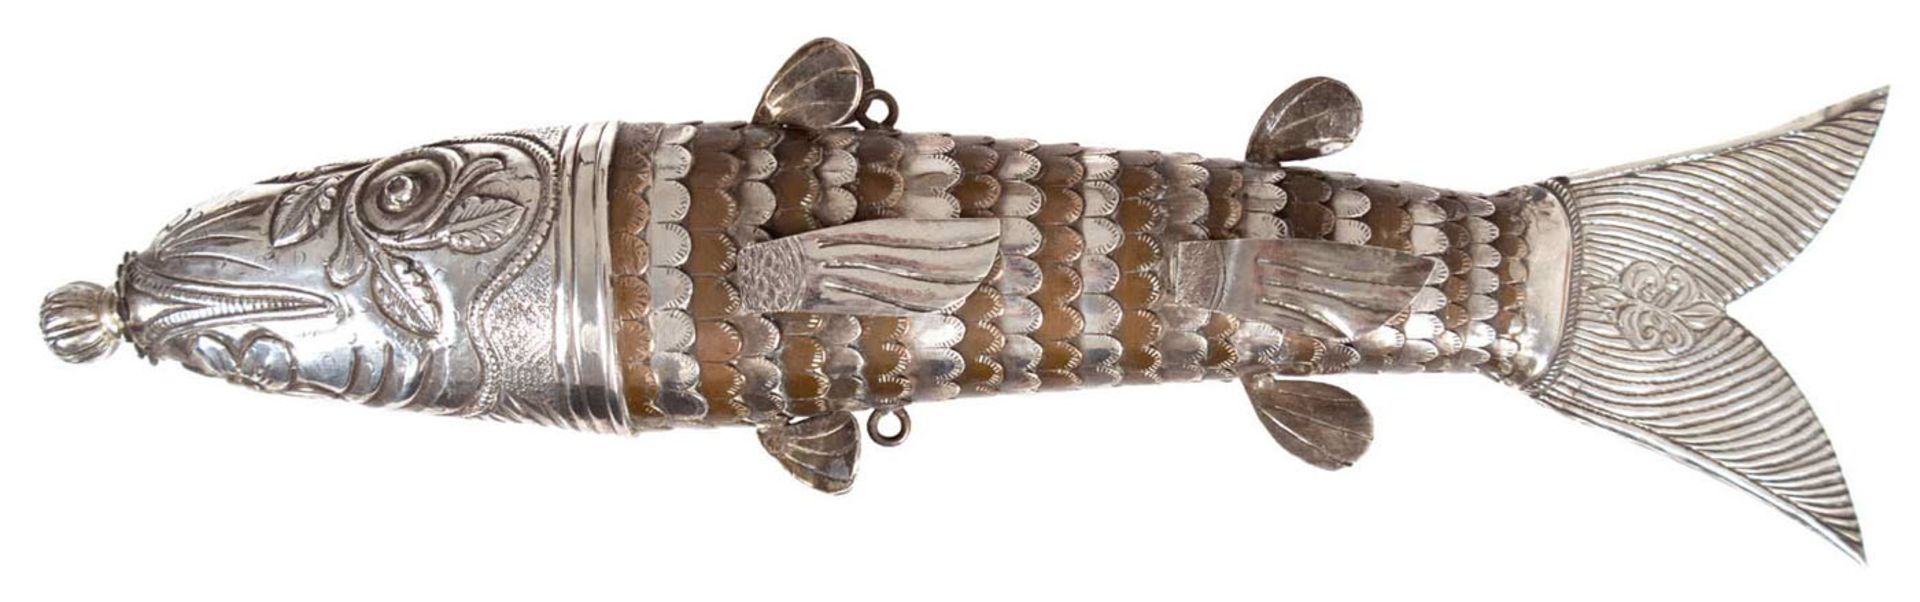 Judaica- große Besamimbüchse in Fischform, um 1800, Silber, geprüft, ca. 650 g, flexibler Korpus, S